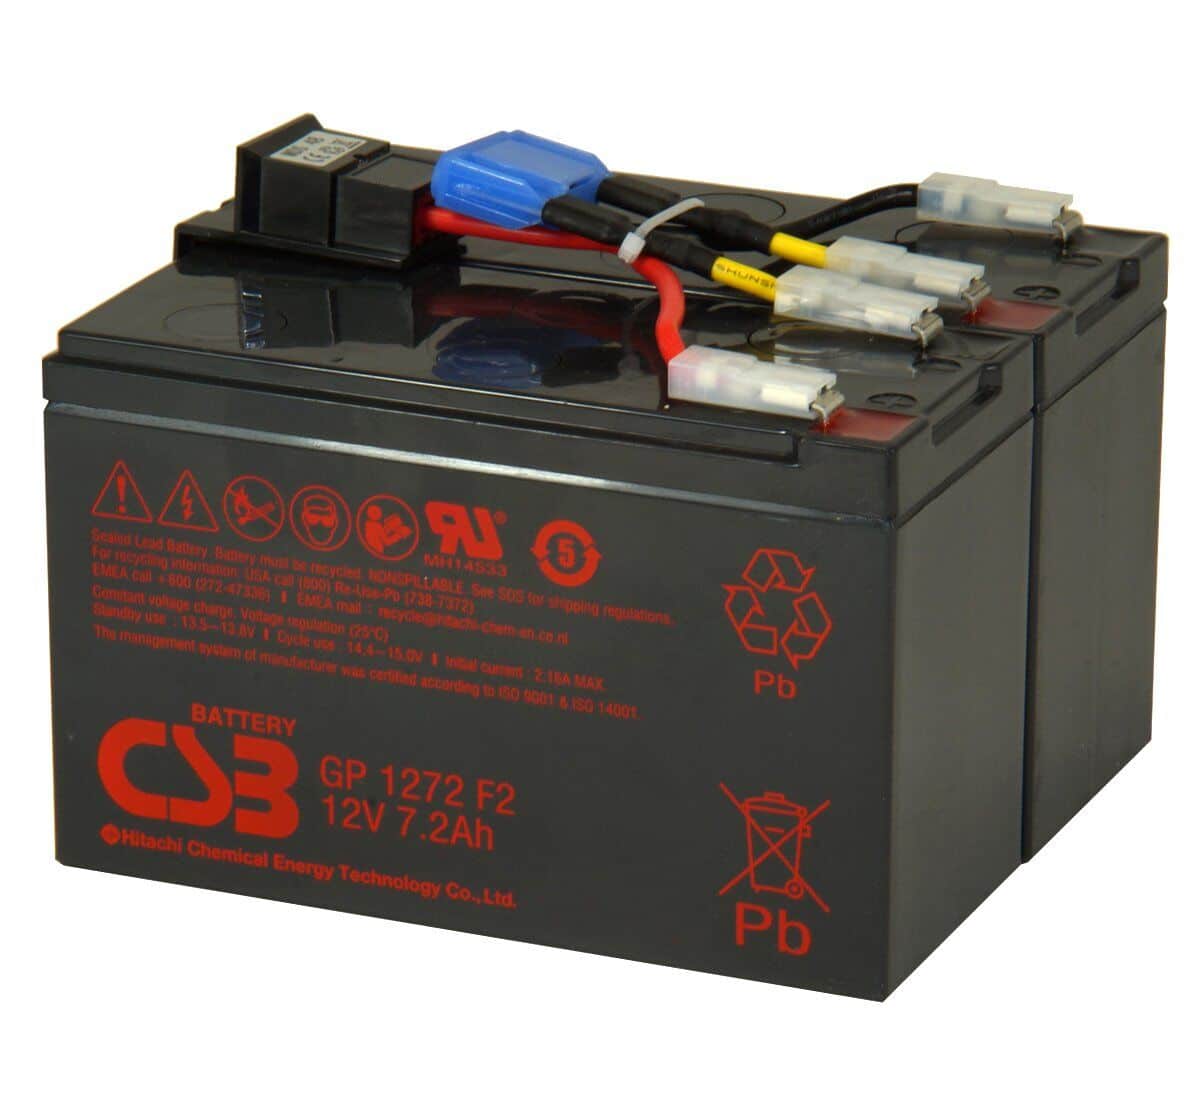 Apc batteries. Rbc48 аккумулятор для Smart-ups APC 750. Smart ups 750 аккумулятор. APC Smart-ups 750 батареи. АКБ для APC Smart ups 750.